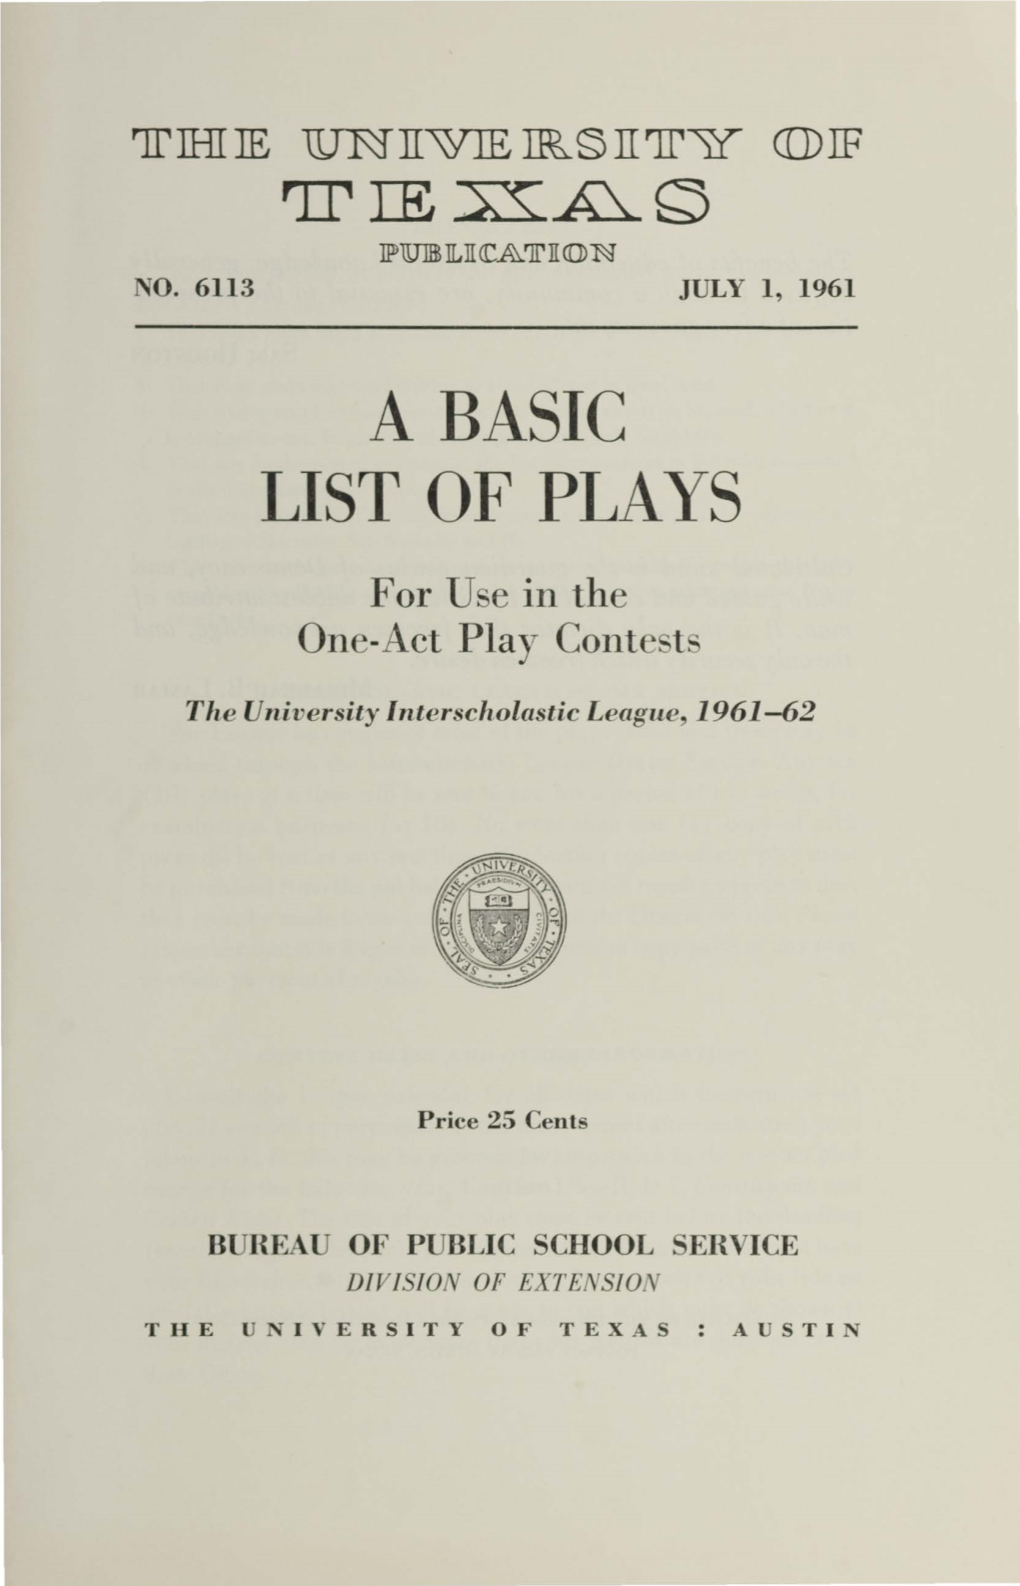 A Basic List of Plays